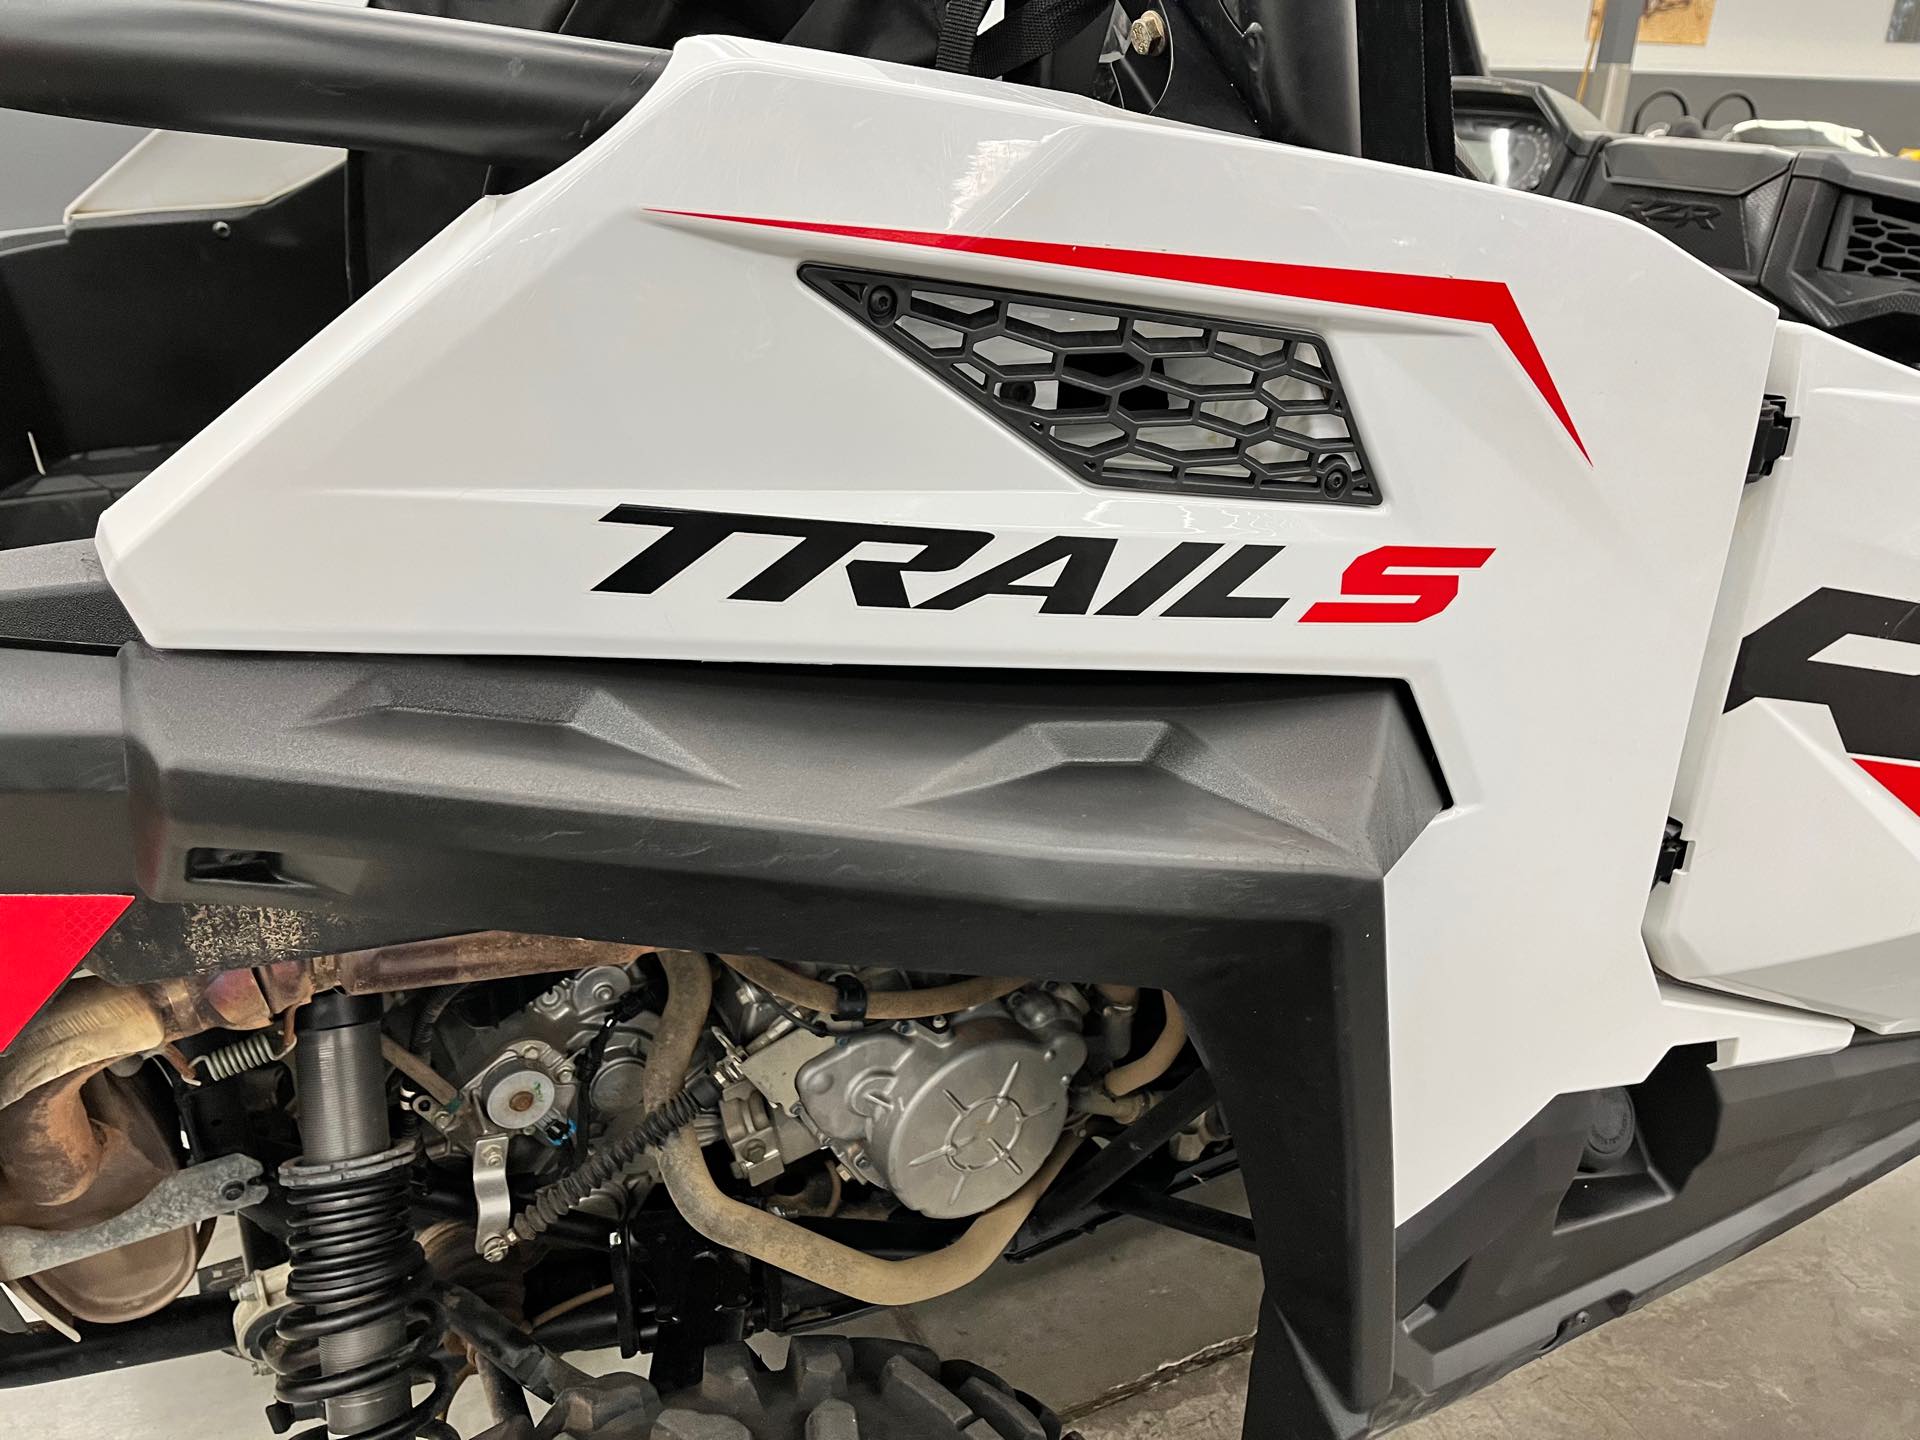 2021 Polaris RZR Trail S 900 Sport at Aces Motorcycles - Denver